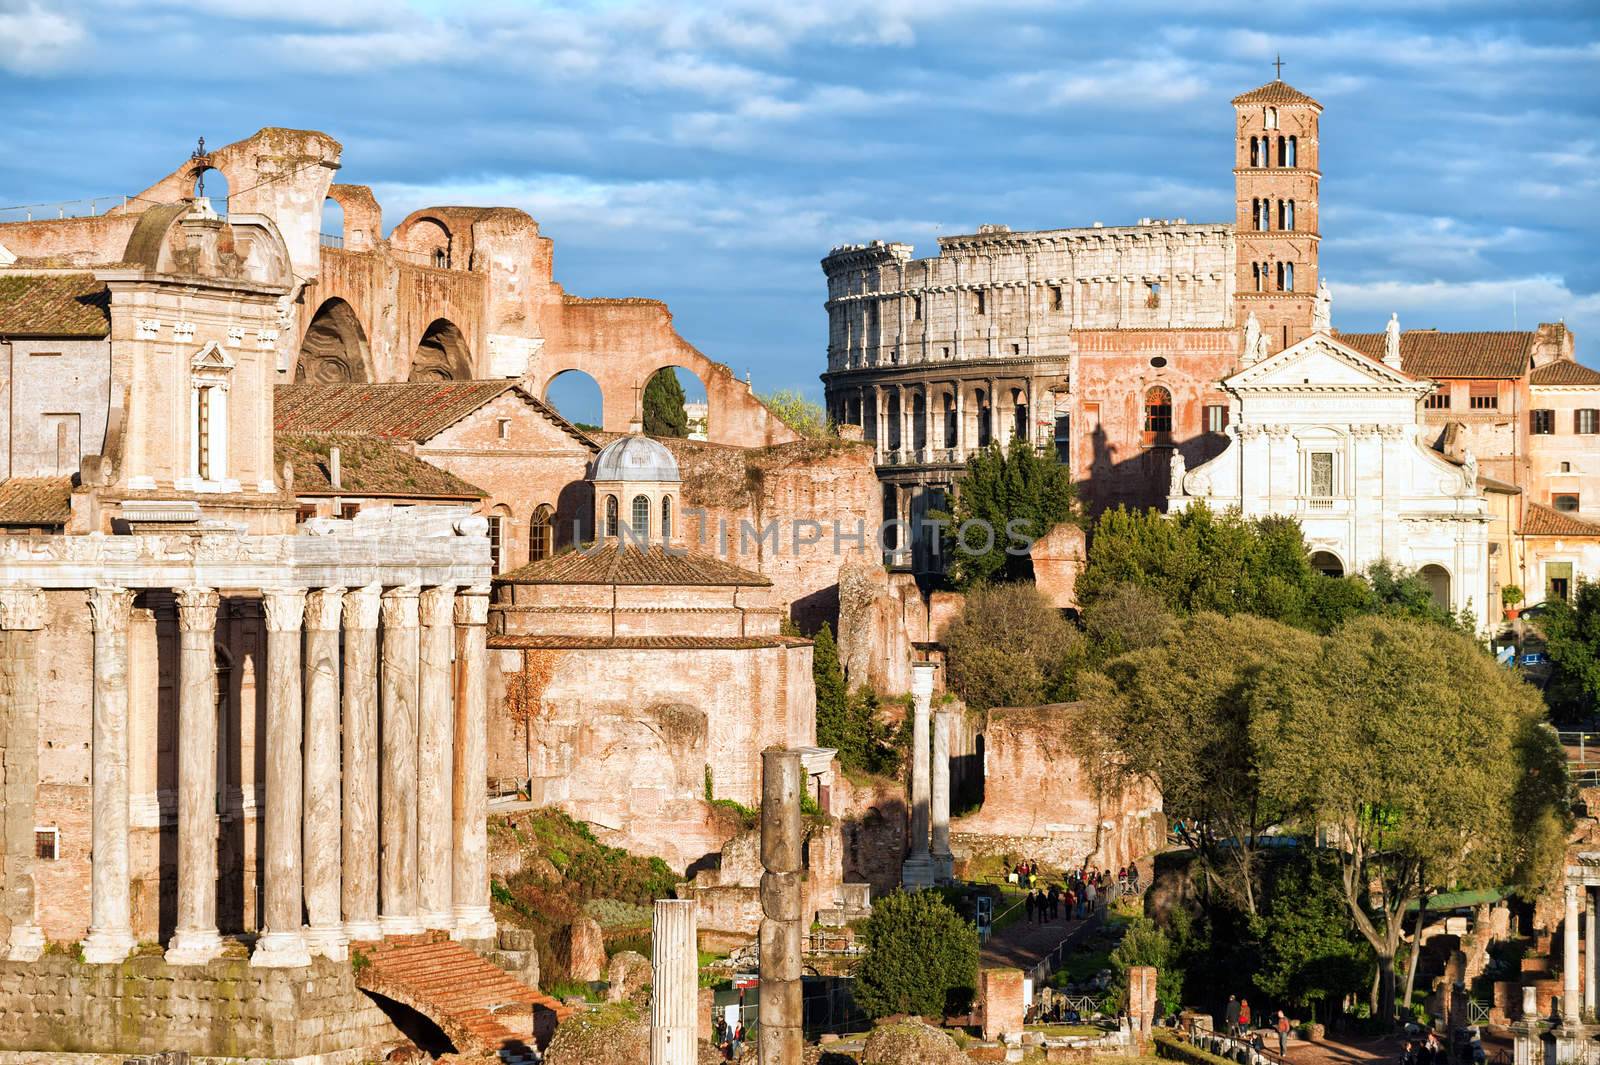 Rome, Italy by GlobePhotos